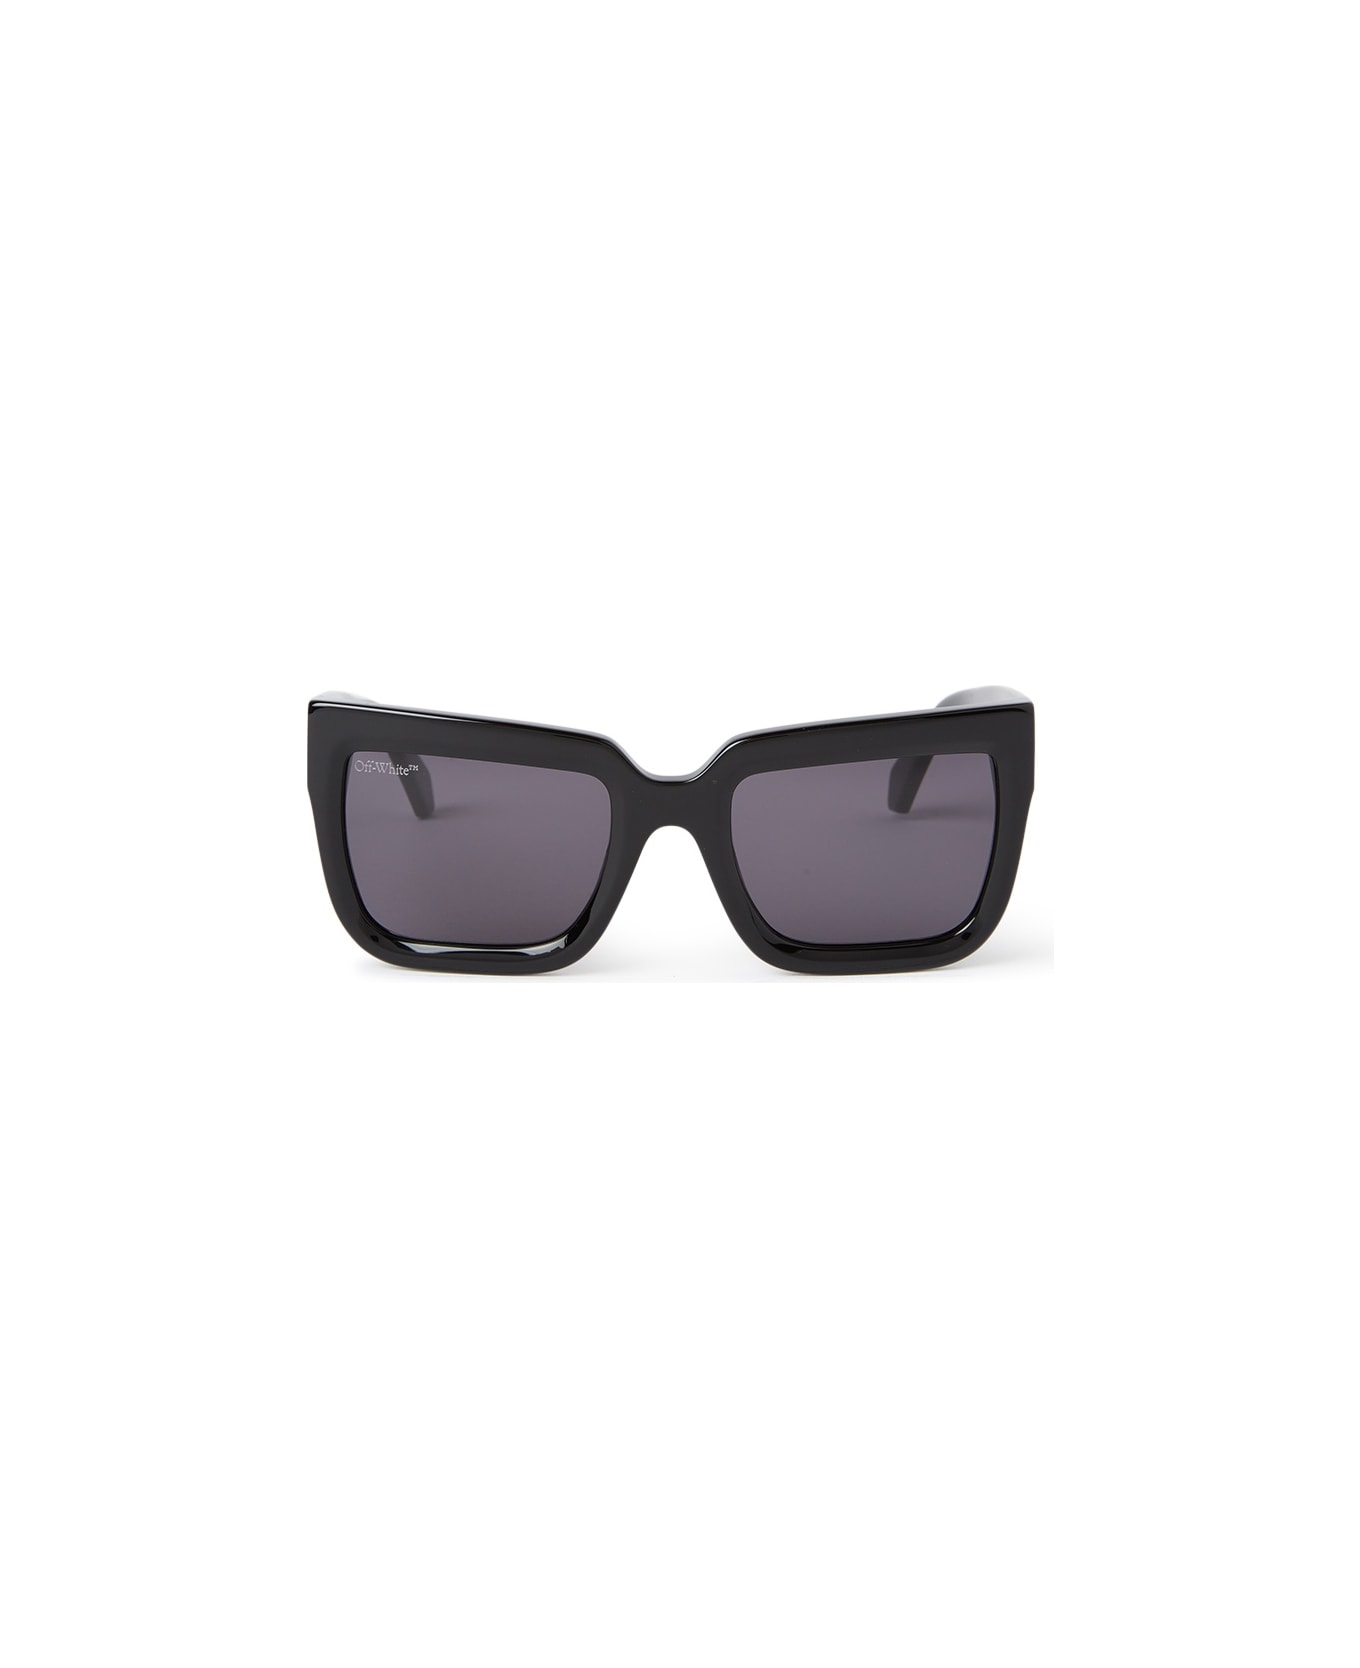 Off-White FIRENZE SUNGLASSES Sunglasses - Black